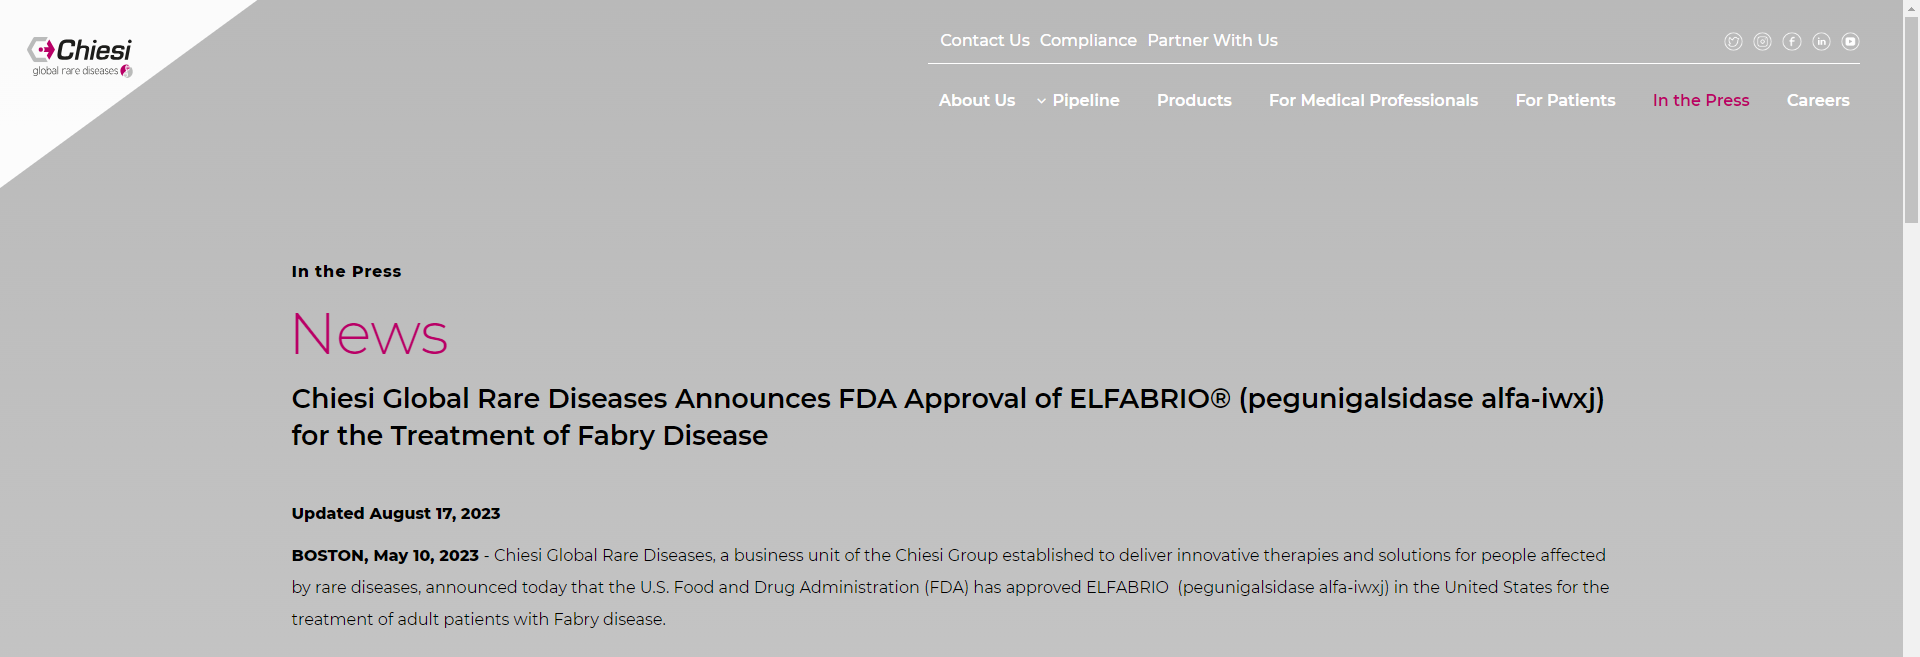 Chiesi Global Rare Diseases Announces FDA Approval of ELFABRIO® (pegunigalsidase alfa-iwxj) for the Treatment of Fabry Disease